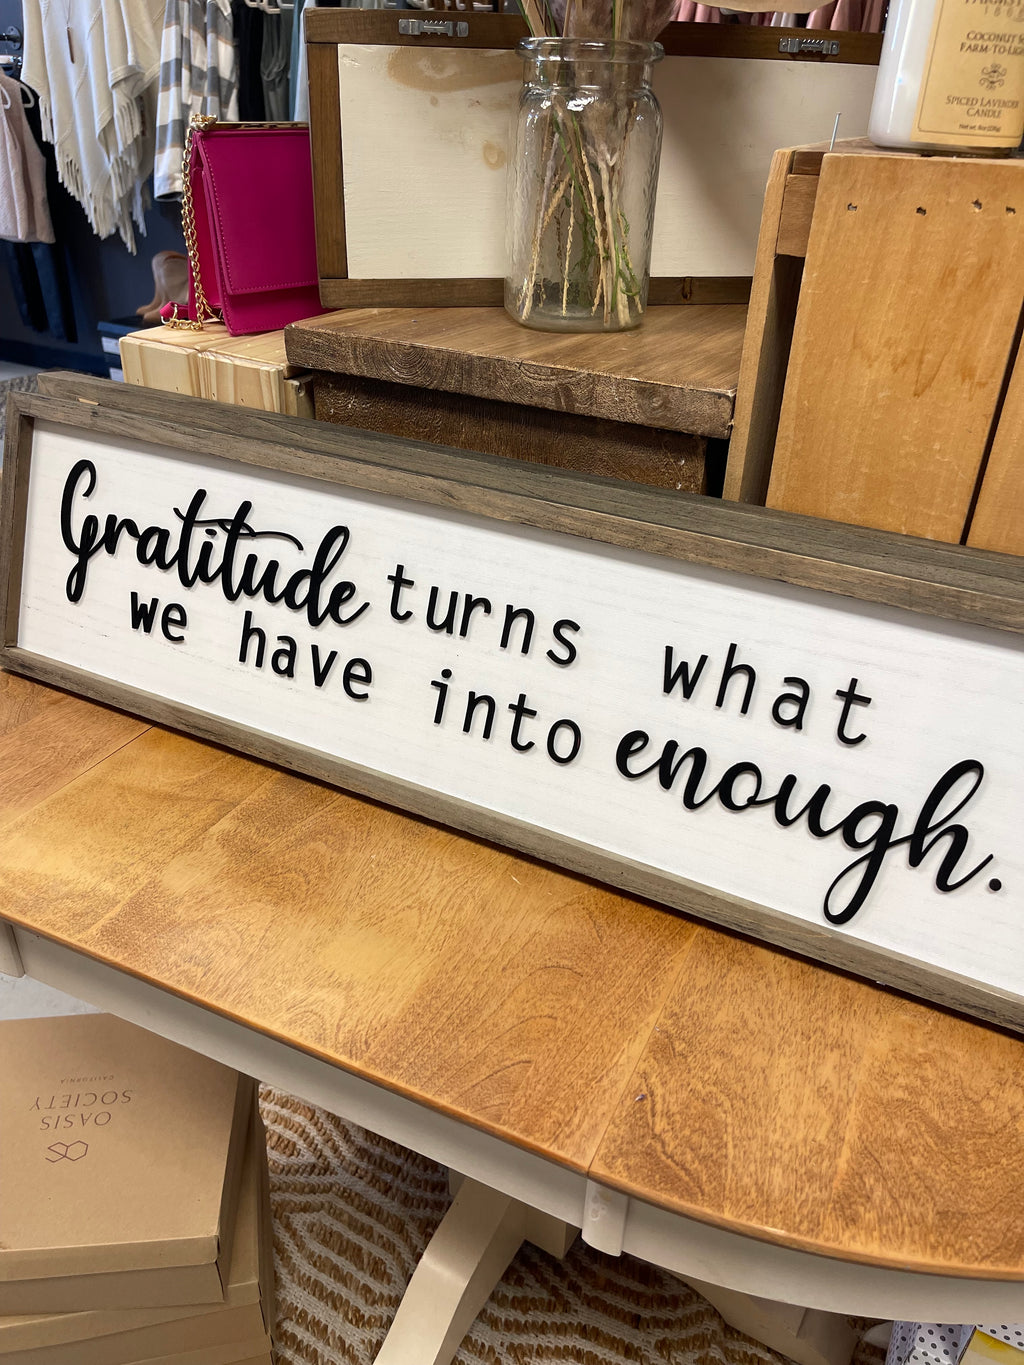 Gratitude is Enough